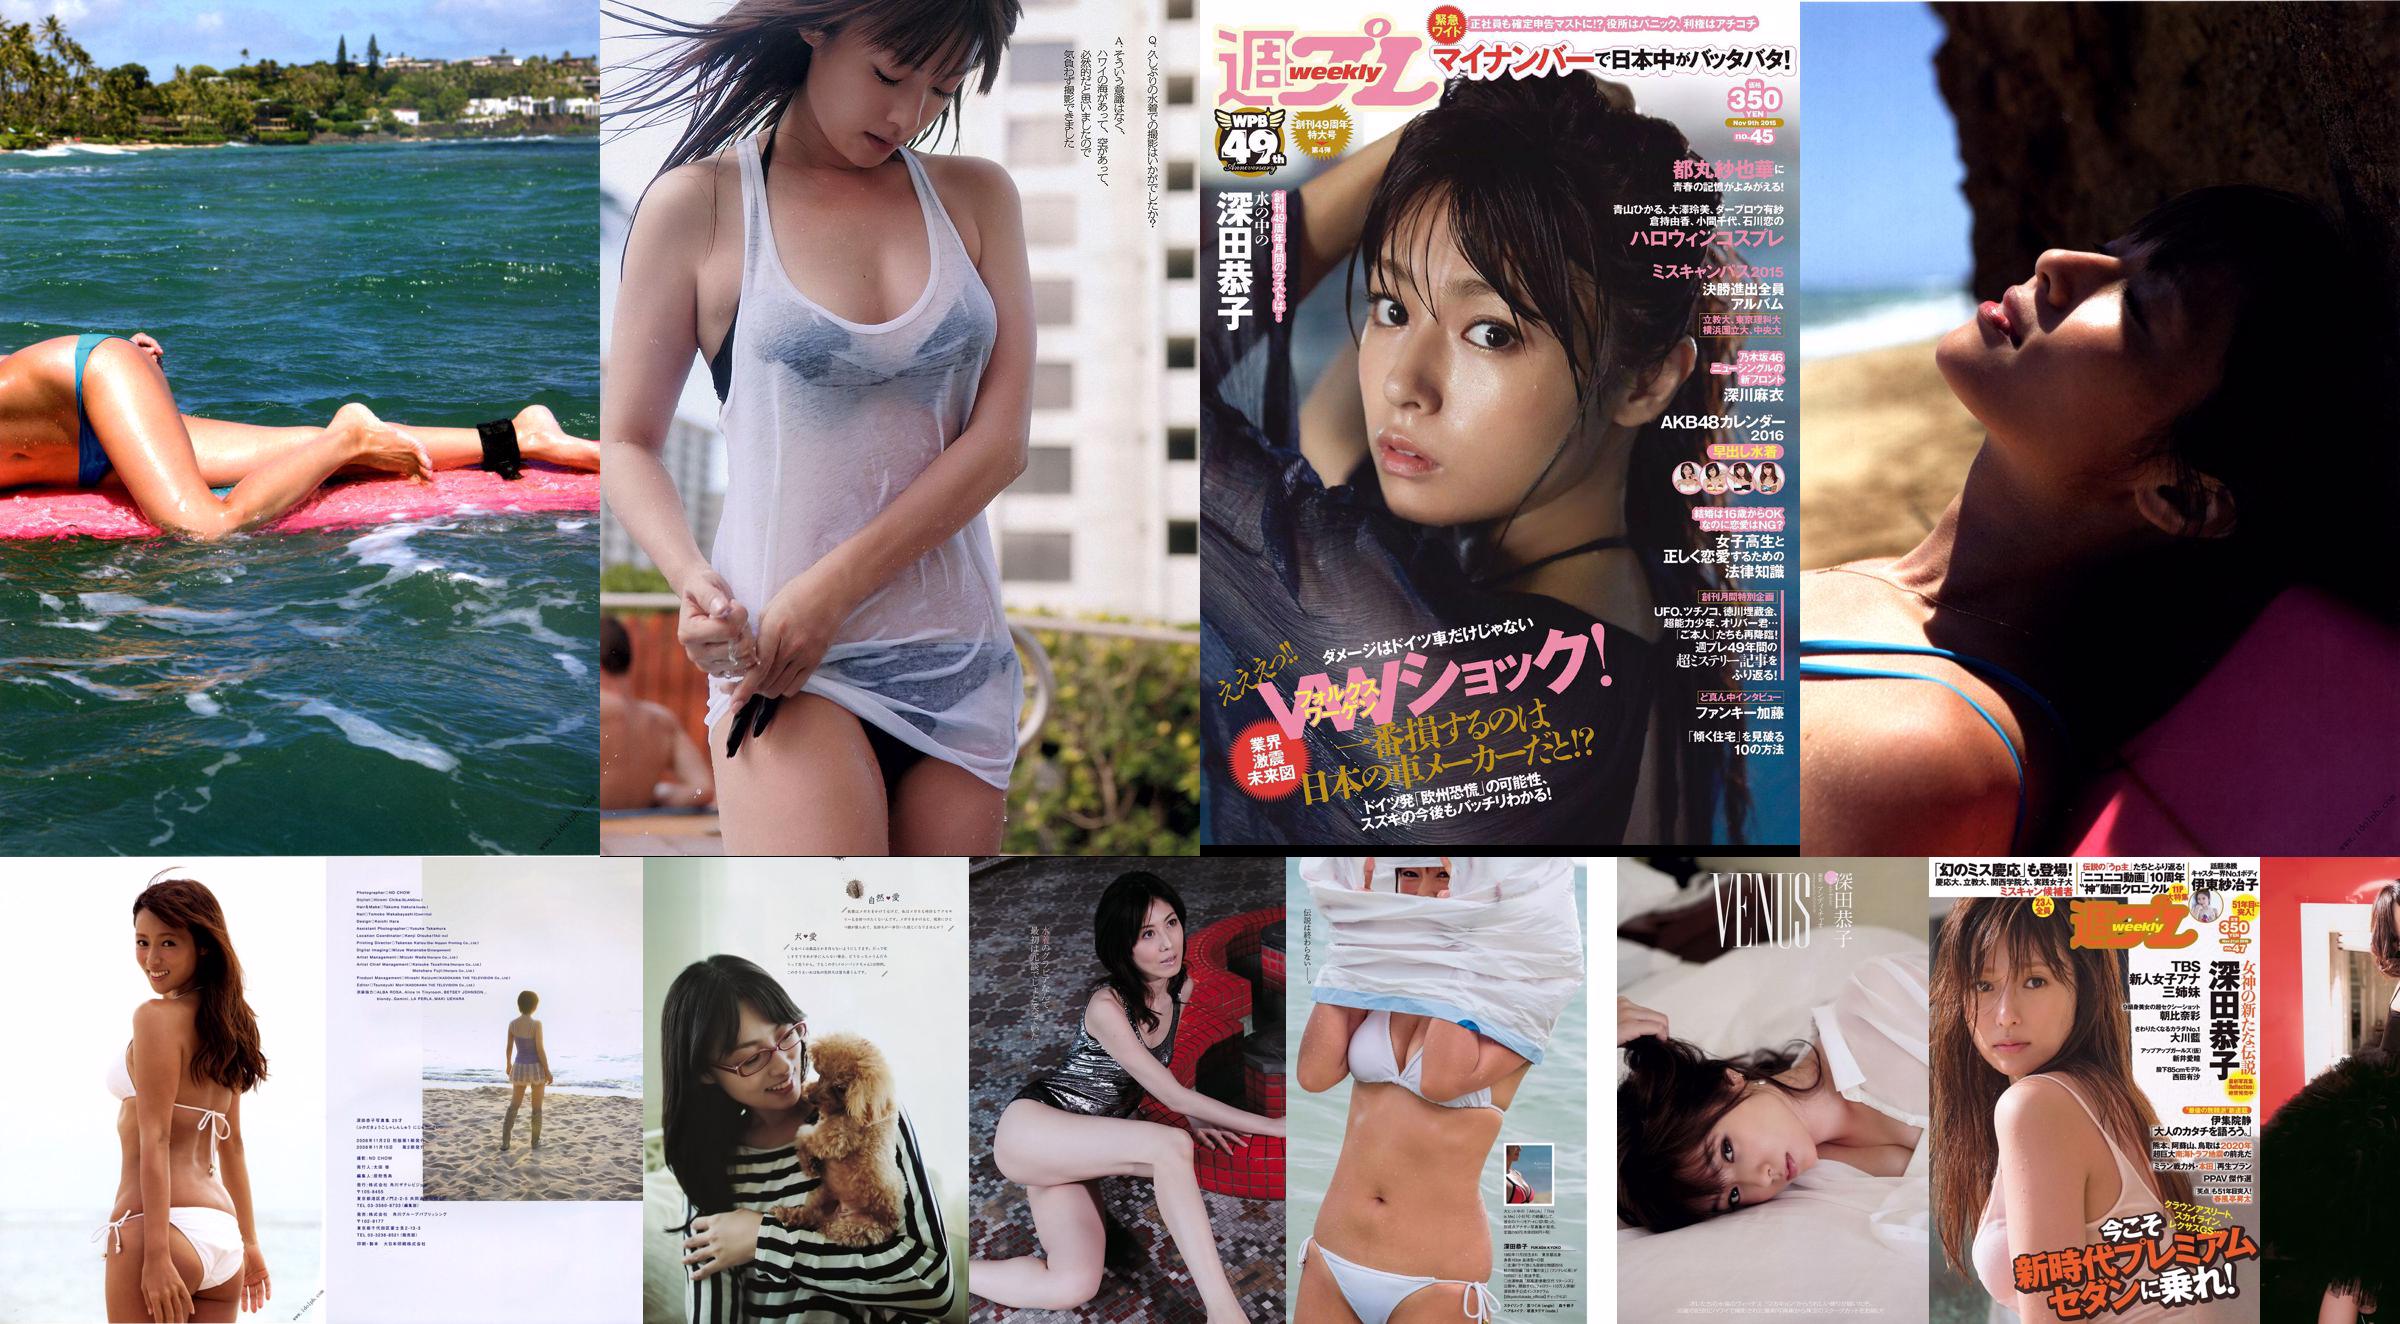 [FLASH] Fukada Kyoko Kawashima Nami Yanagi Yuri Nai Ai Saka Na Mi Tan Mi 2015.09.29 Revista fotográfica No.566db8 Página 1